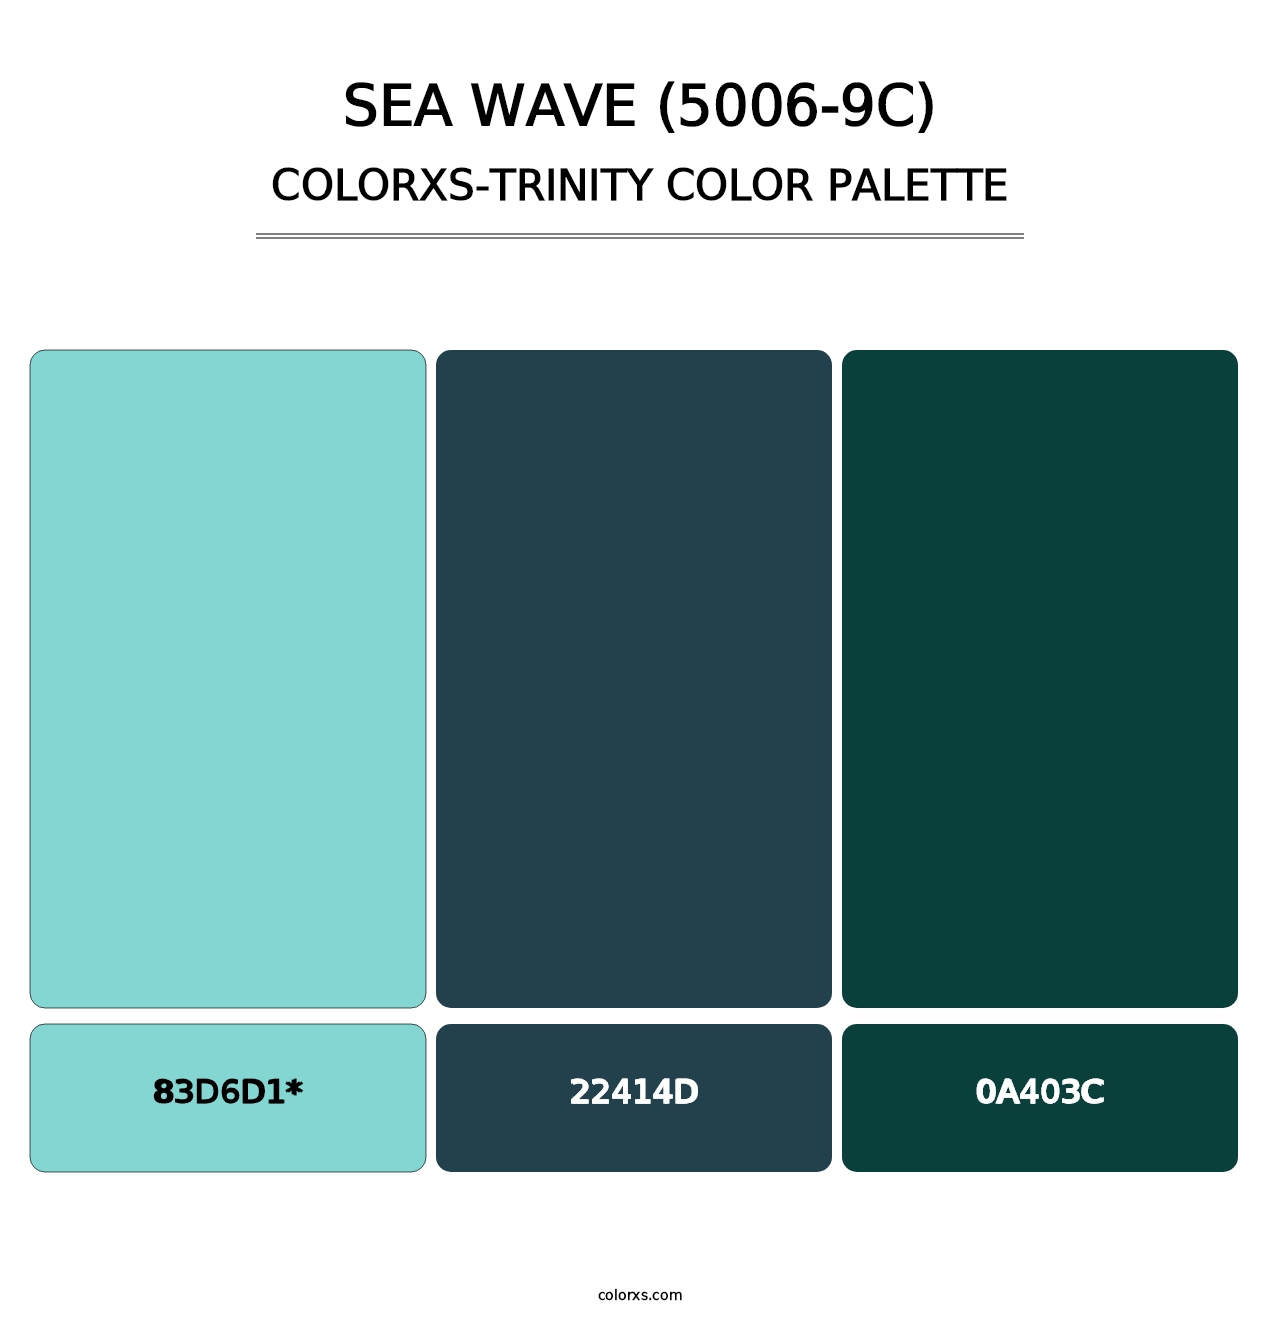 Sea Wave (5006-9C) - Colorxs Trinity Palette